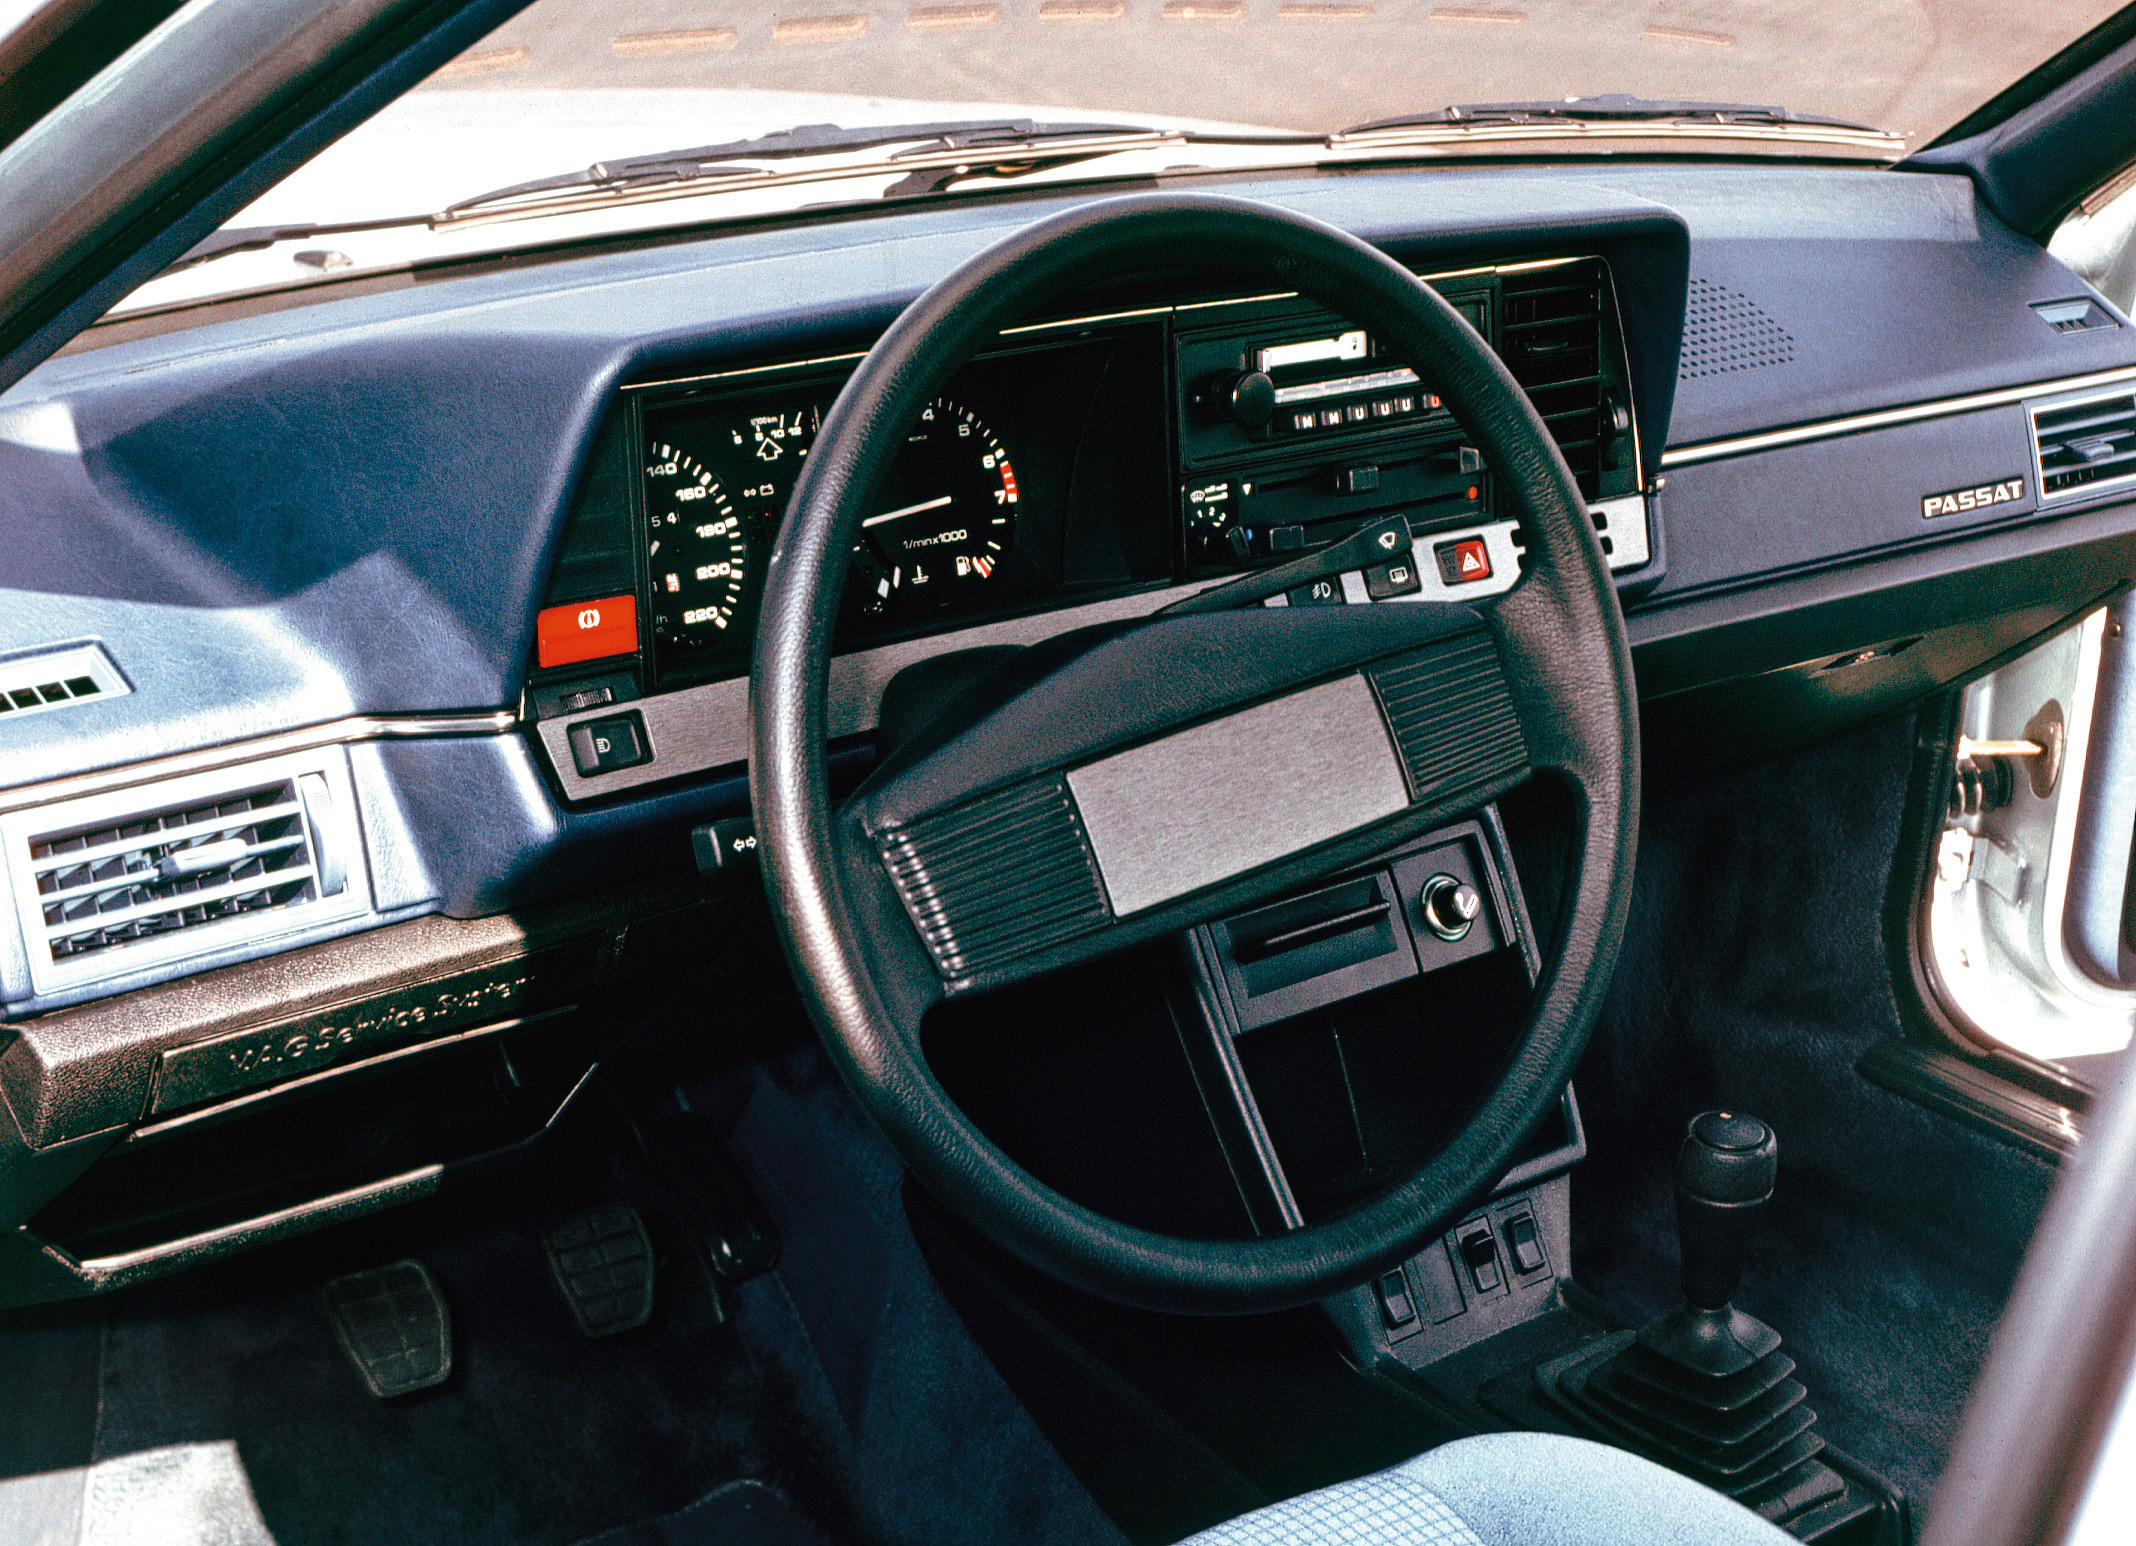 1985 1 1986. Volkswagen Passat b2 хэтчбек салон. Volkswagen Passat b2 универсал салон. Фольксваген Пассат б2 1986. Volkswagen Passat, 1981 хэтчбек.